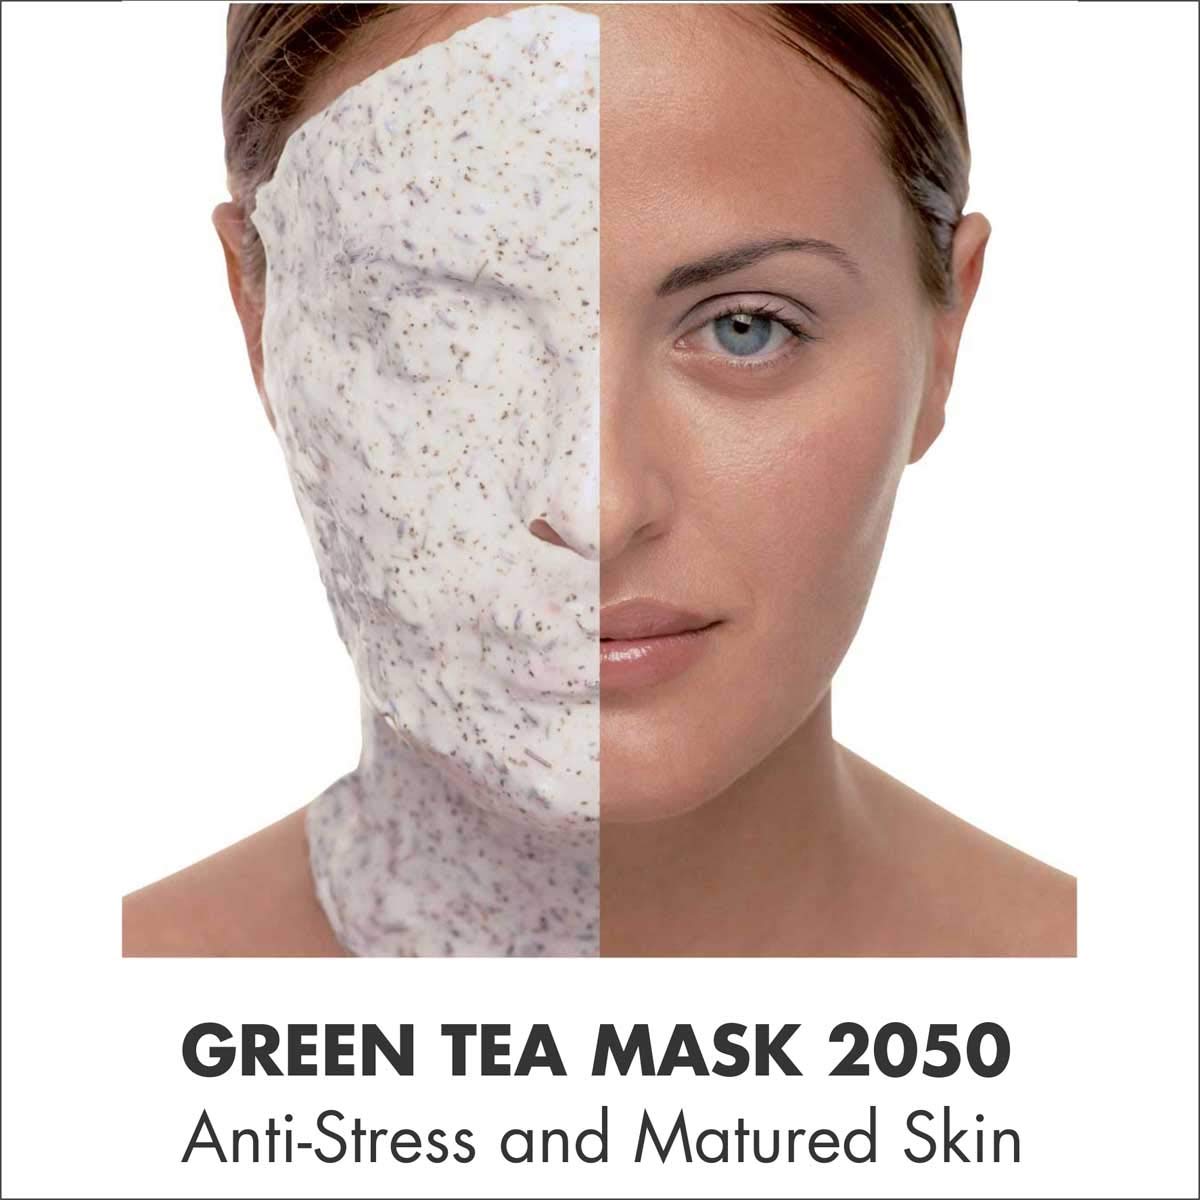 Casmara for Anti-Stress & Matured Skin Green Tea Mask 2050 (1gel & 1powder) Casmara